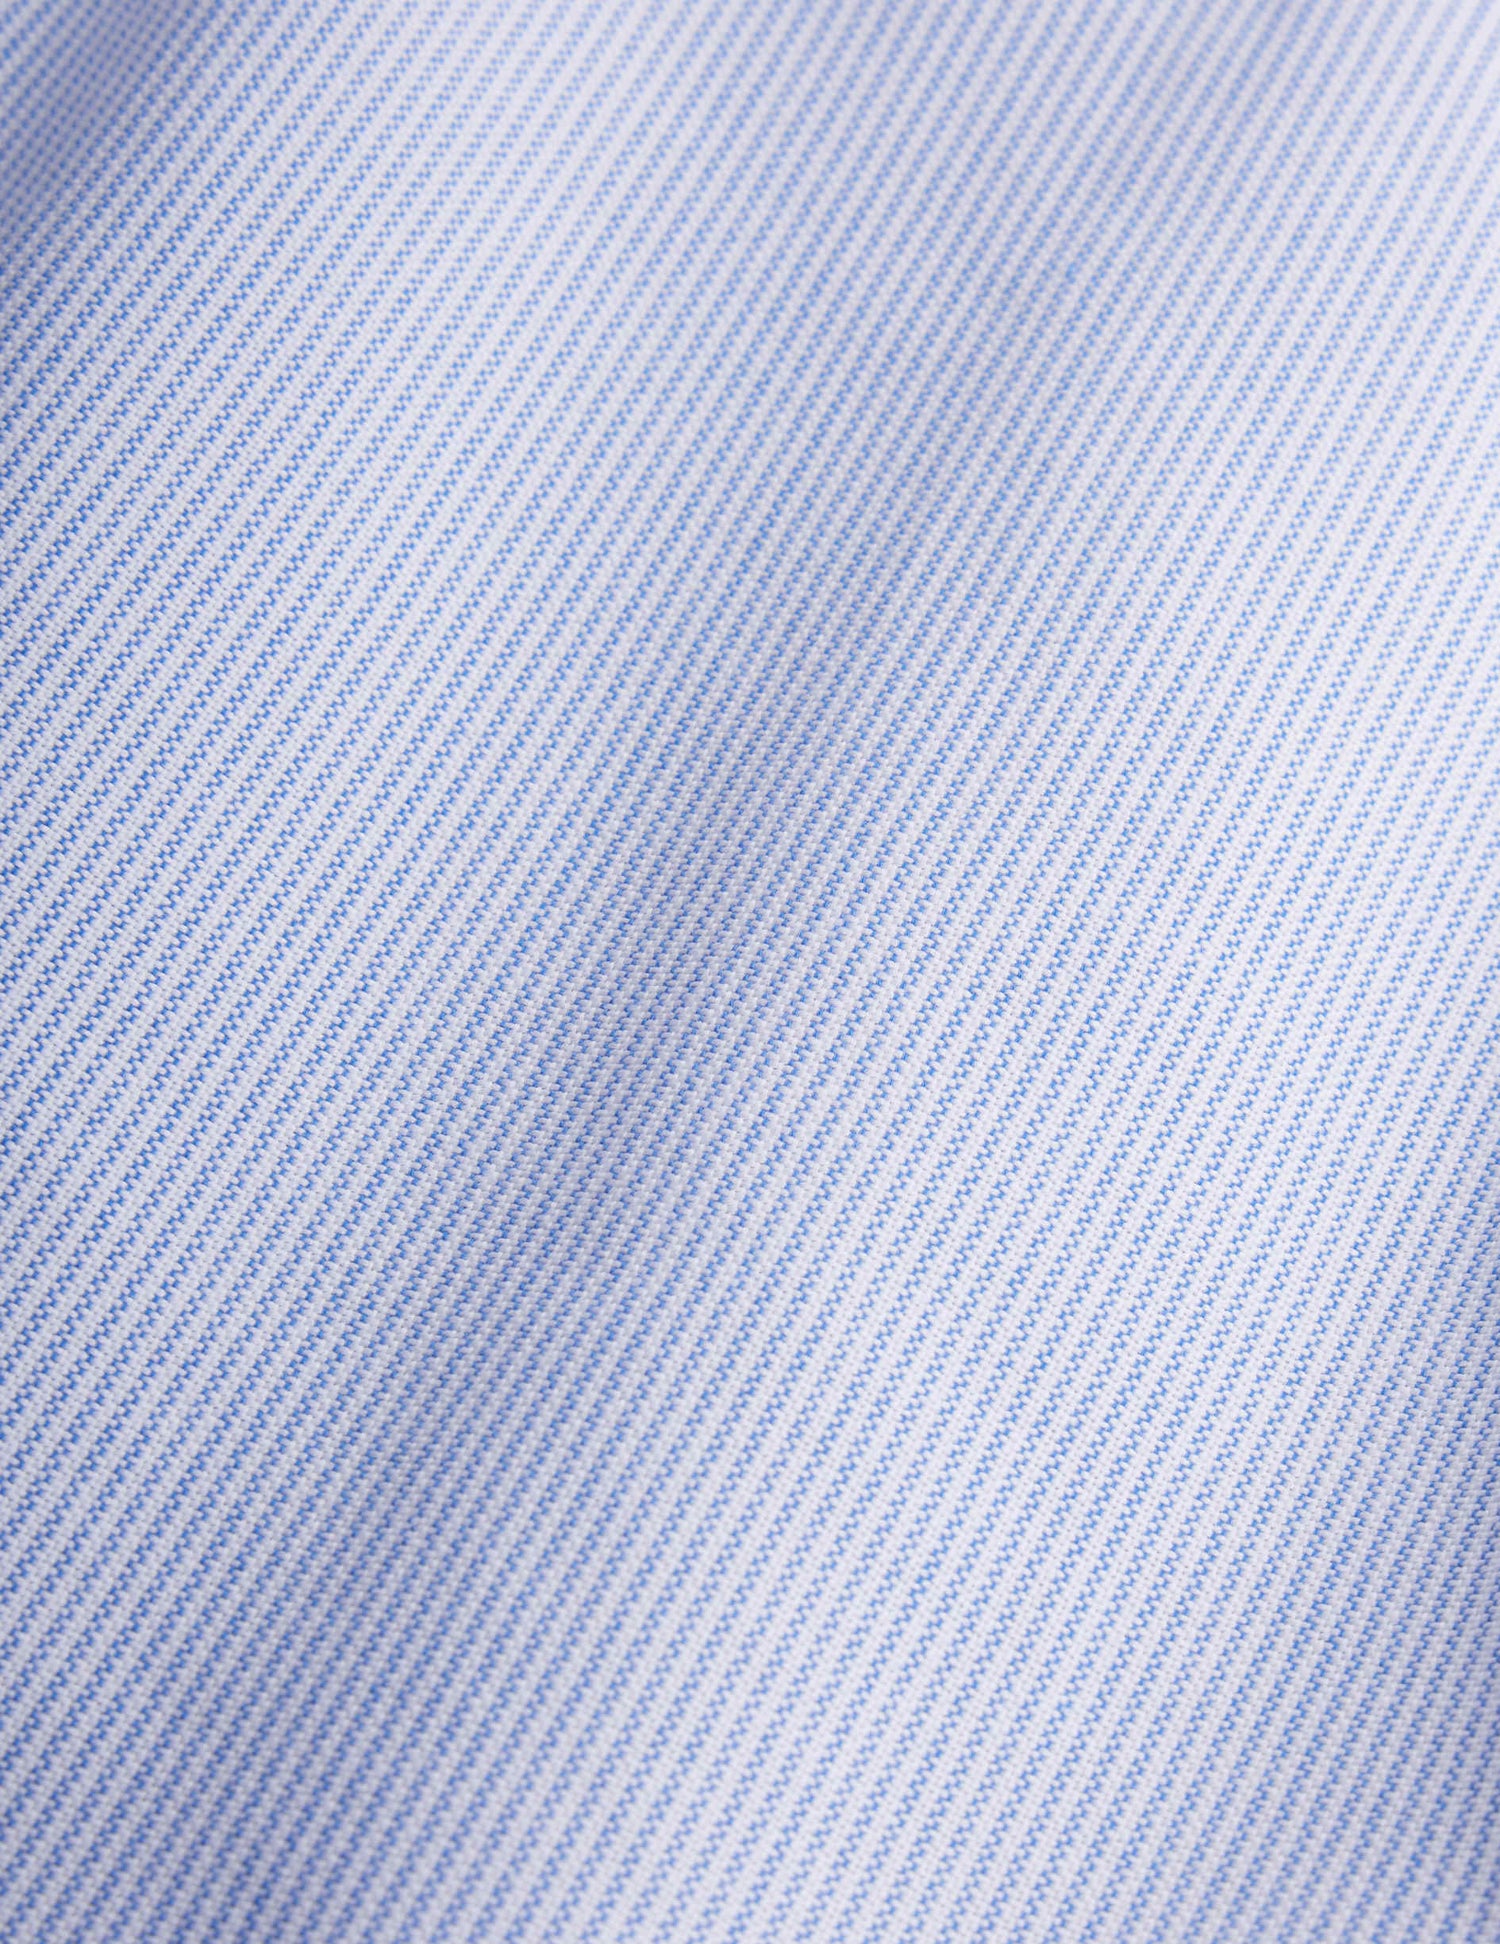 Striped blue Carl shirt - Oxford - Open straight Collar#5